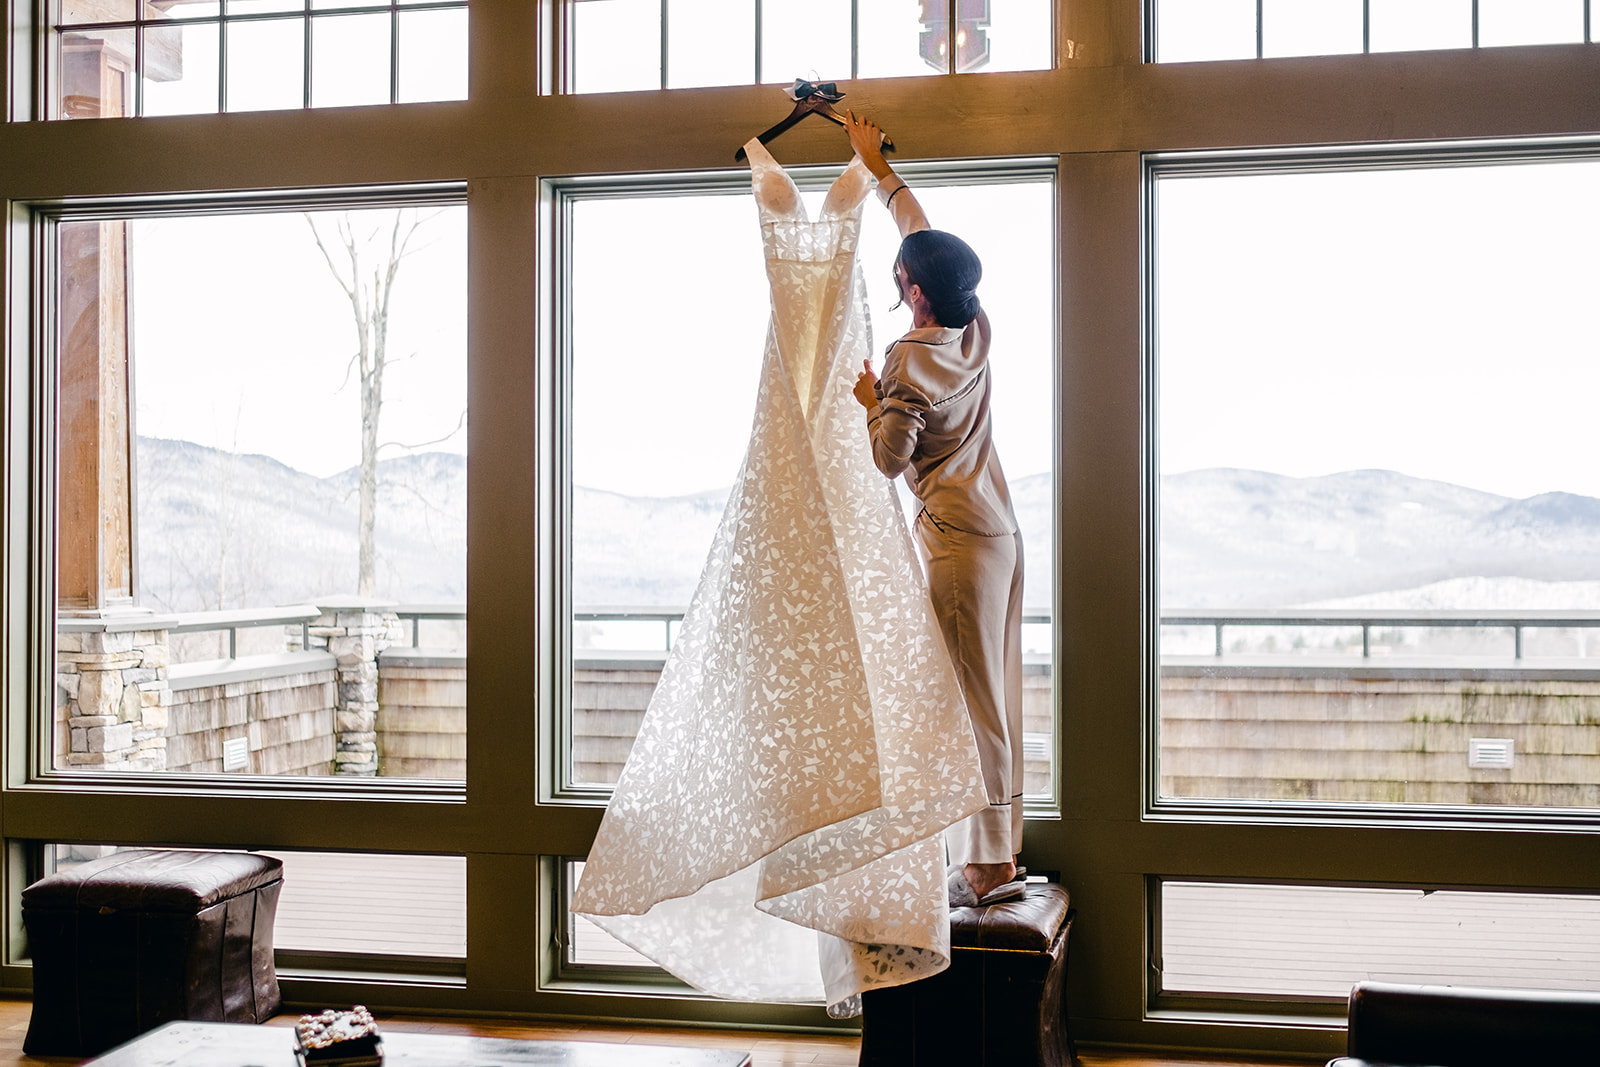 Best photographers for Mountain Top Inn weddings